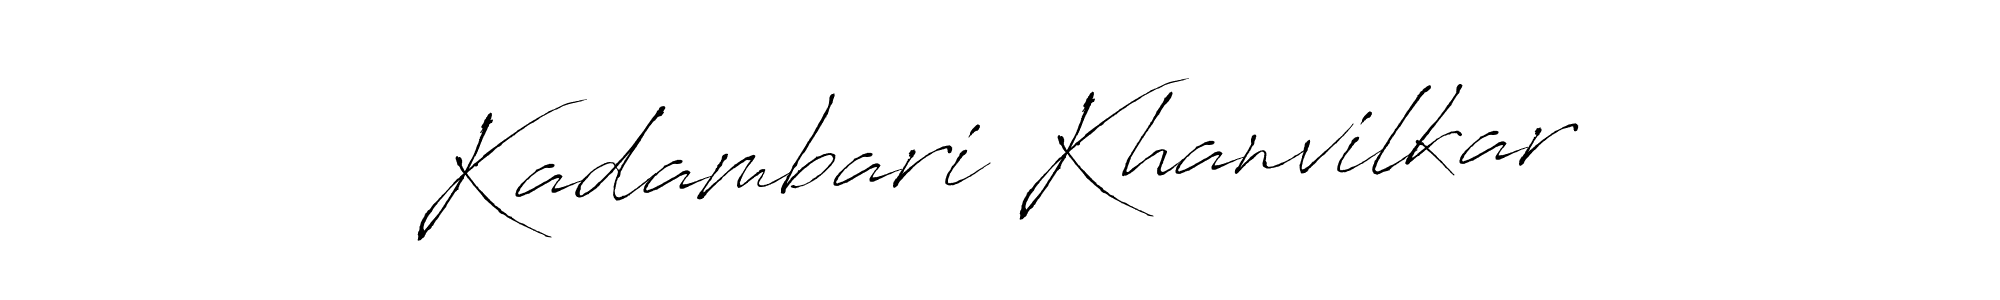 Make a beautiful signature design for name Kadambari Khanvilkar. Use this online signature maker to create a handwritten signature for free. Kadambari Khanvilkar signature style 6 images and pictures png